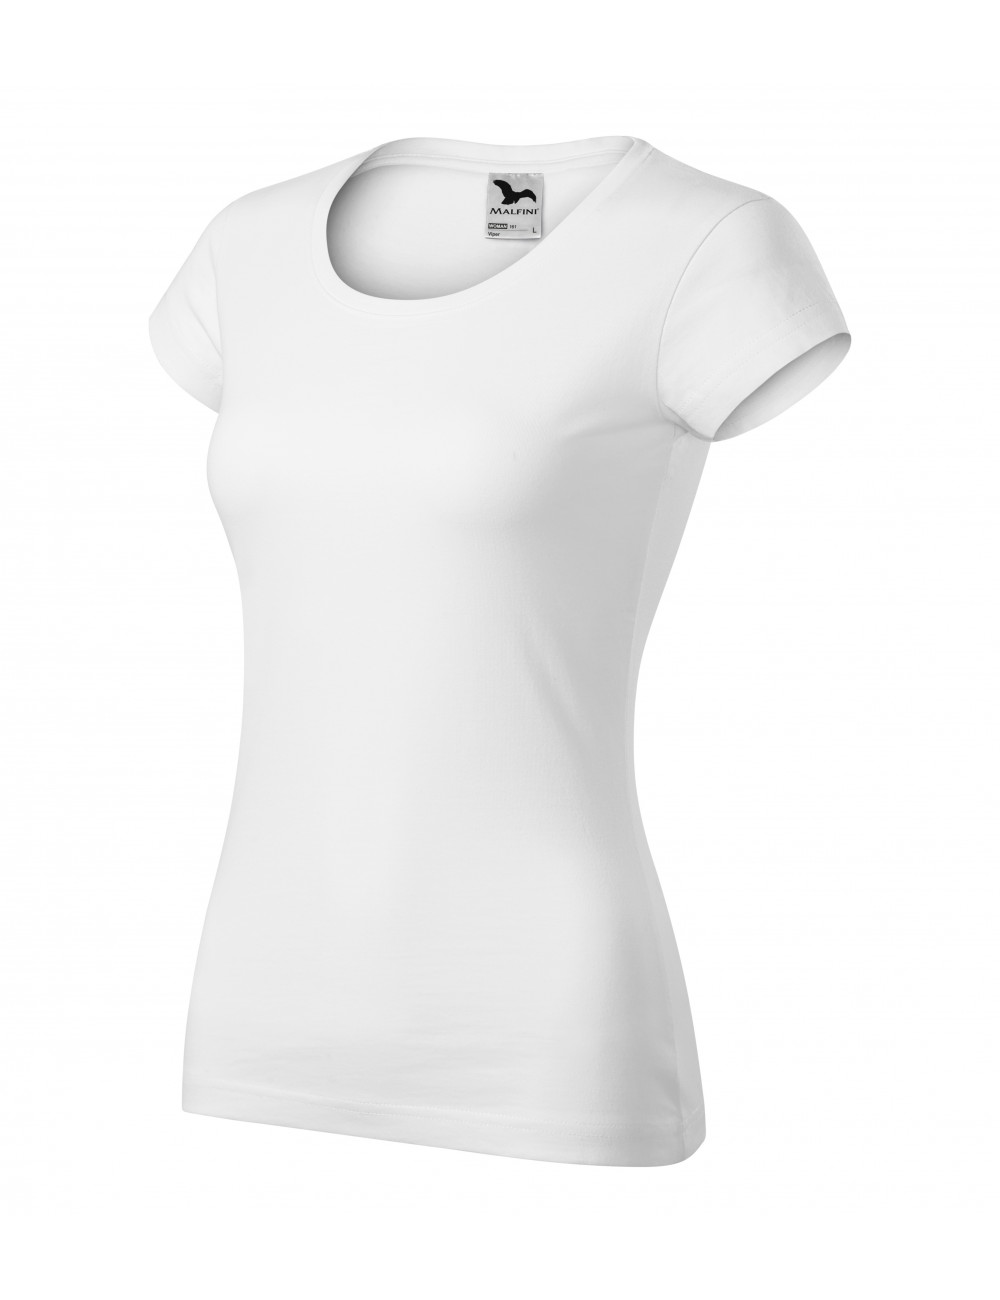 Women`s t-shirt viper 161 white Adler Malfini